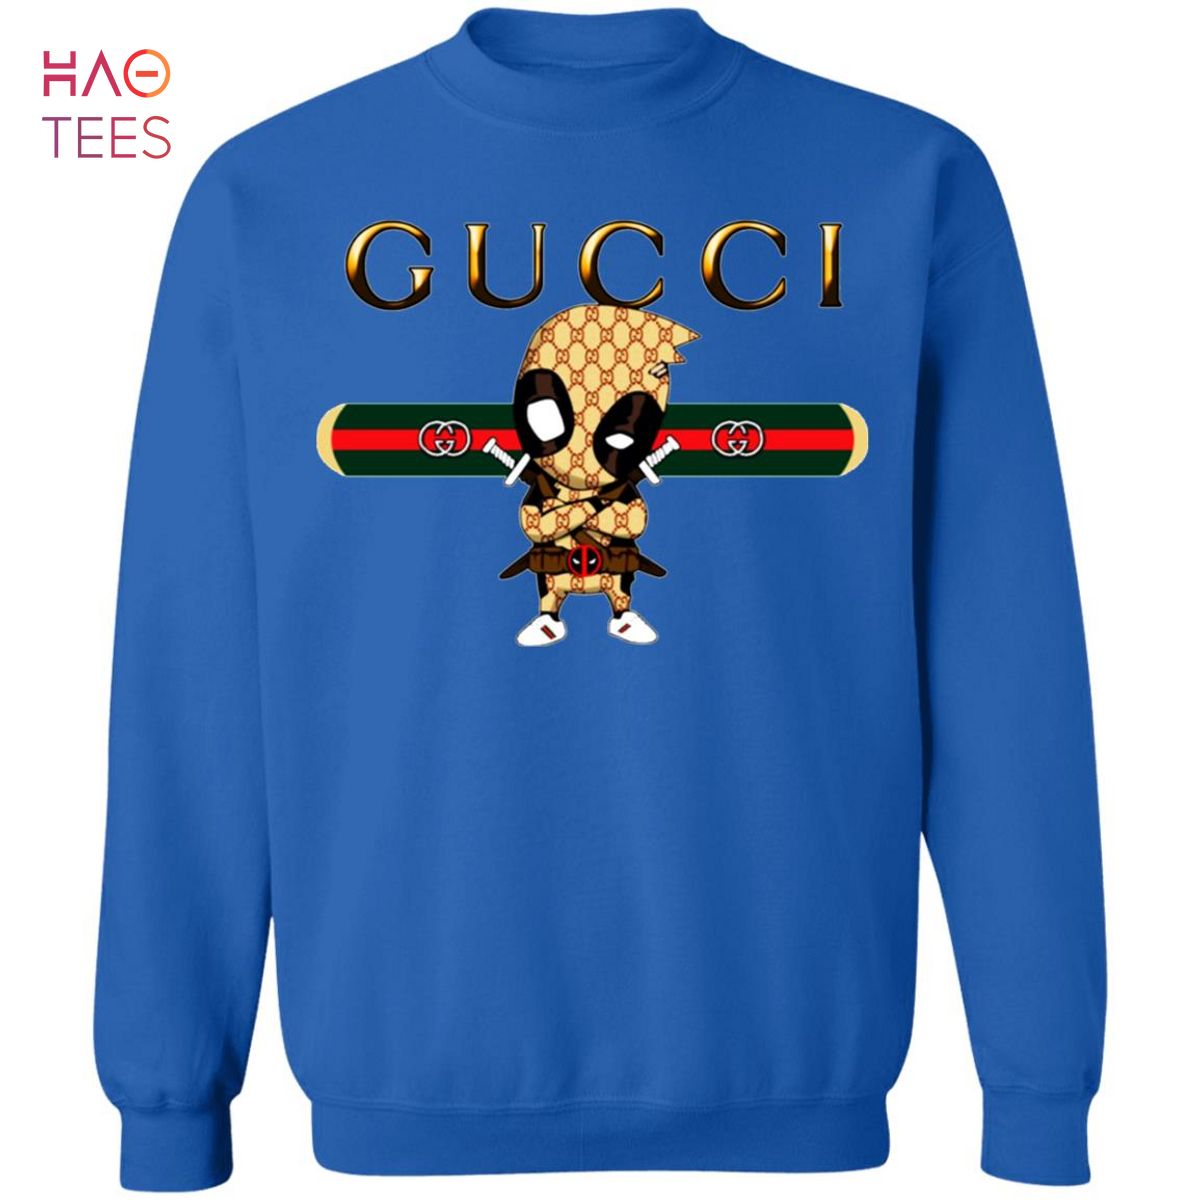 HOT Deadpool Gucci Sweater